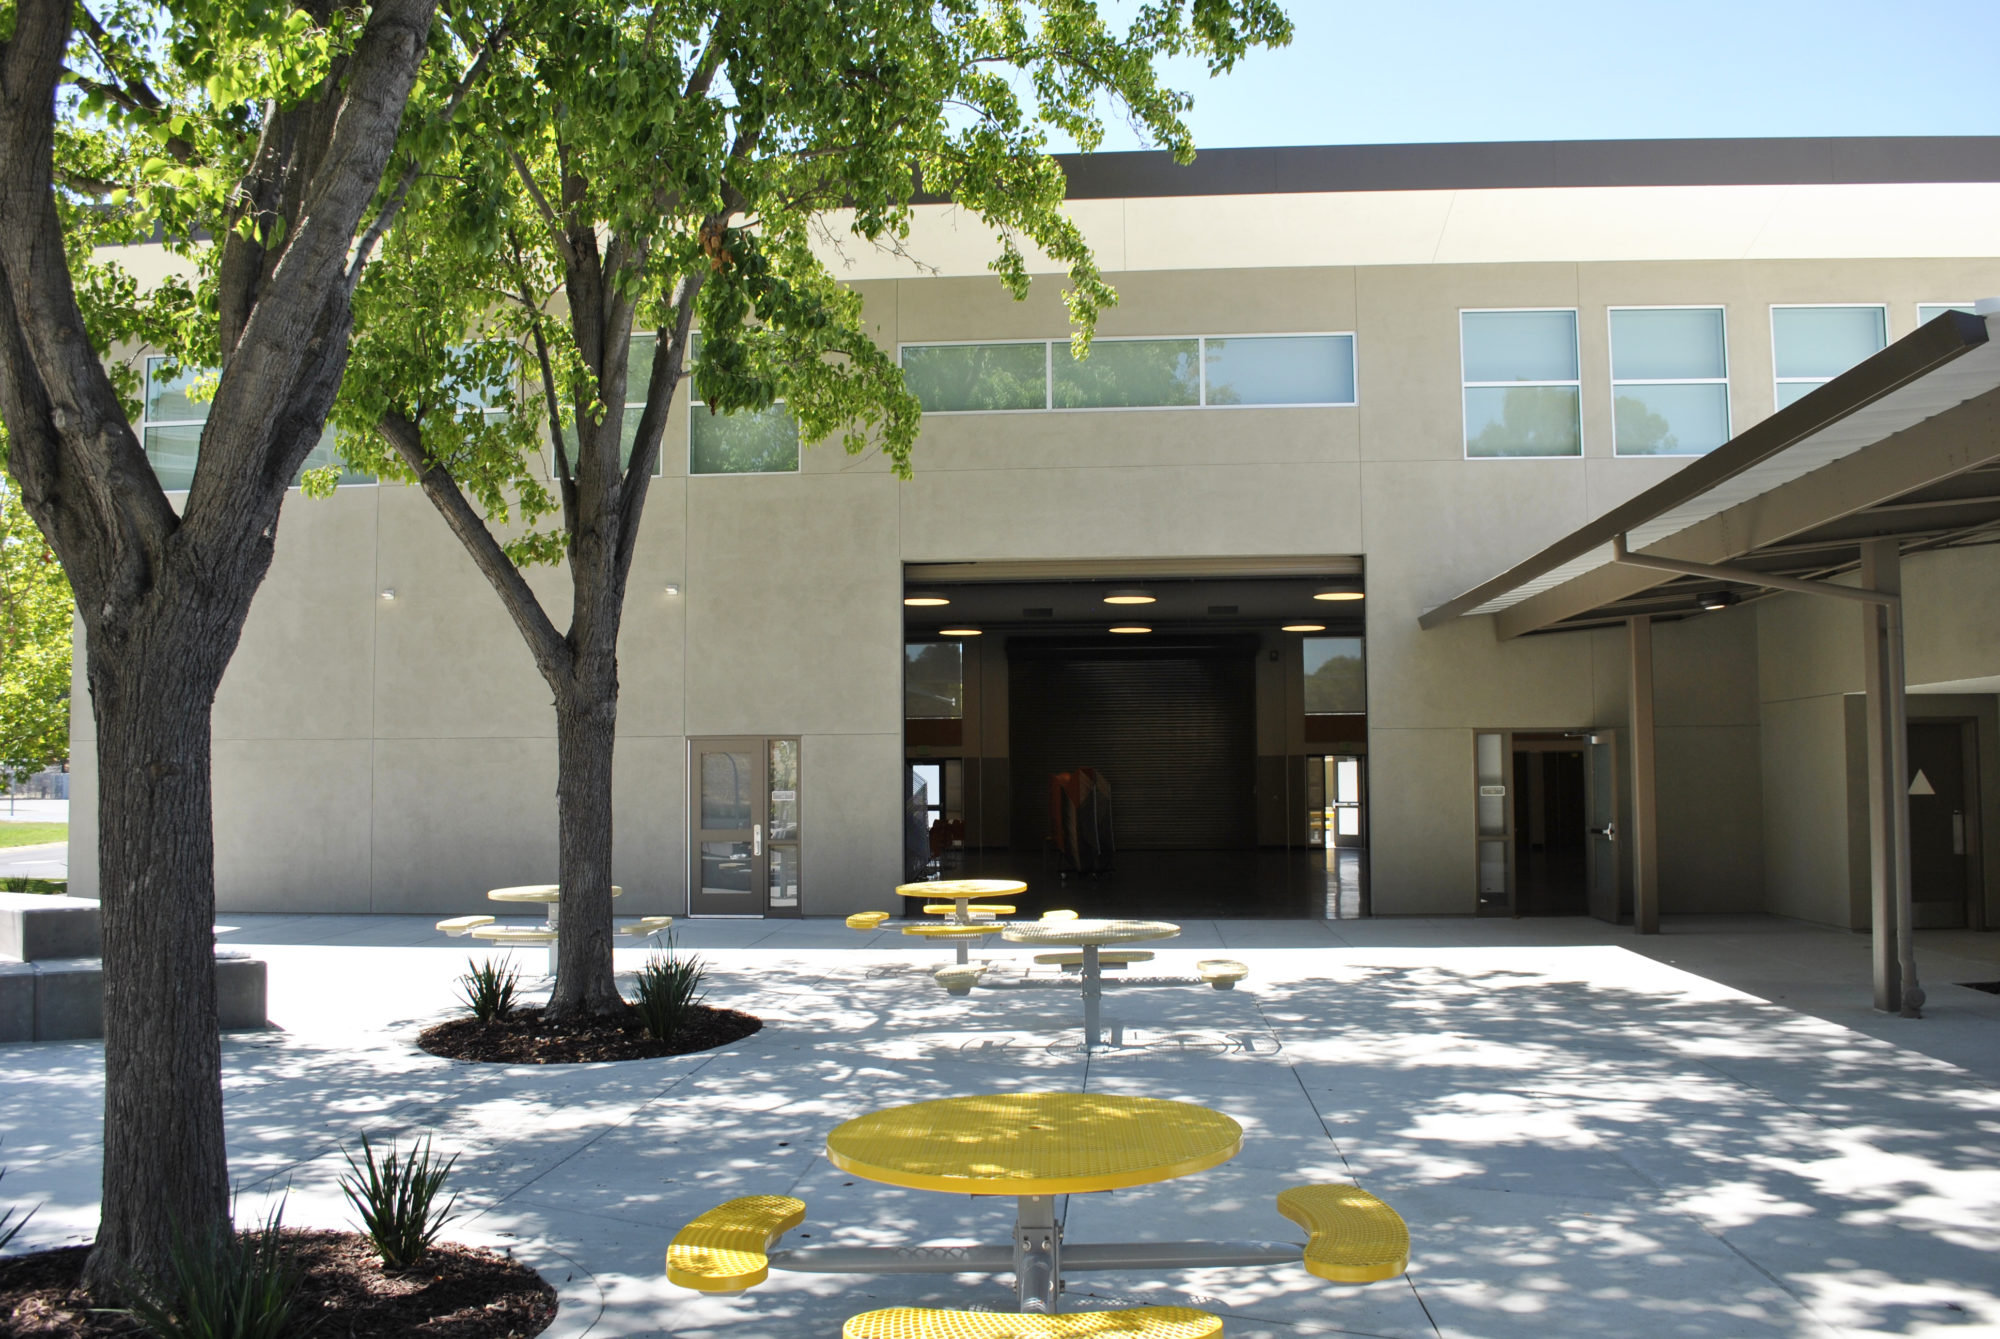 Tice Creek K-8 School Mulitpurpose Building Exterior Courtyard